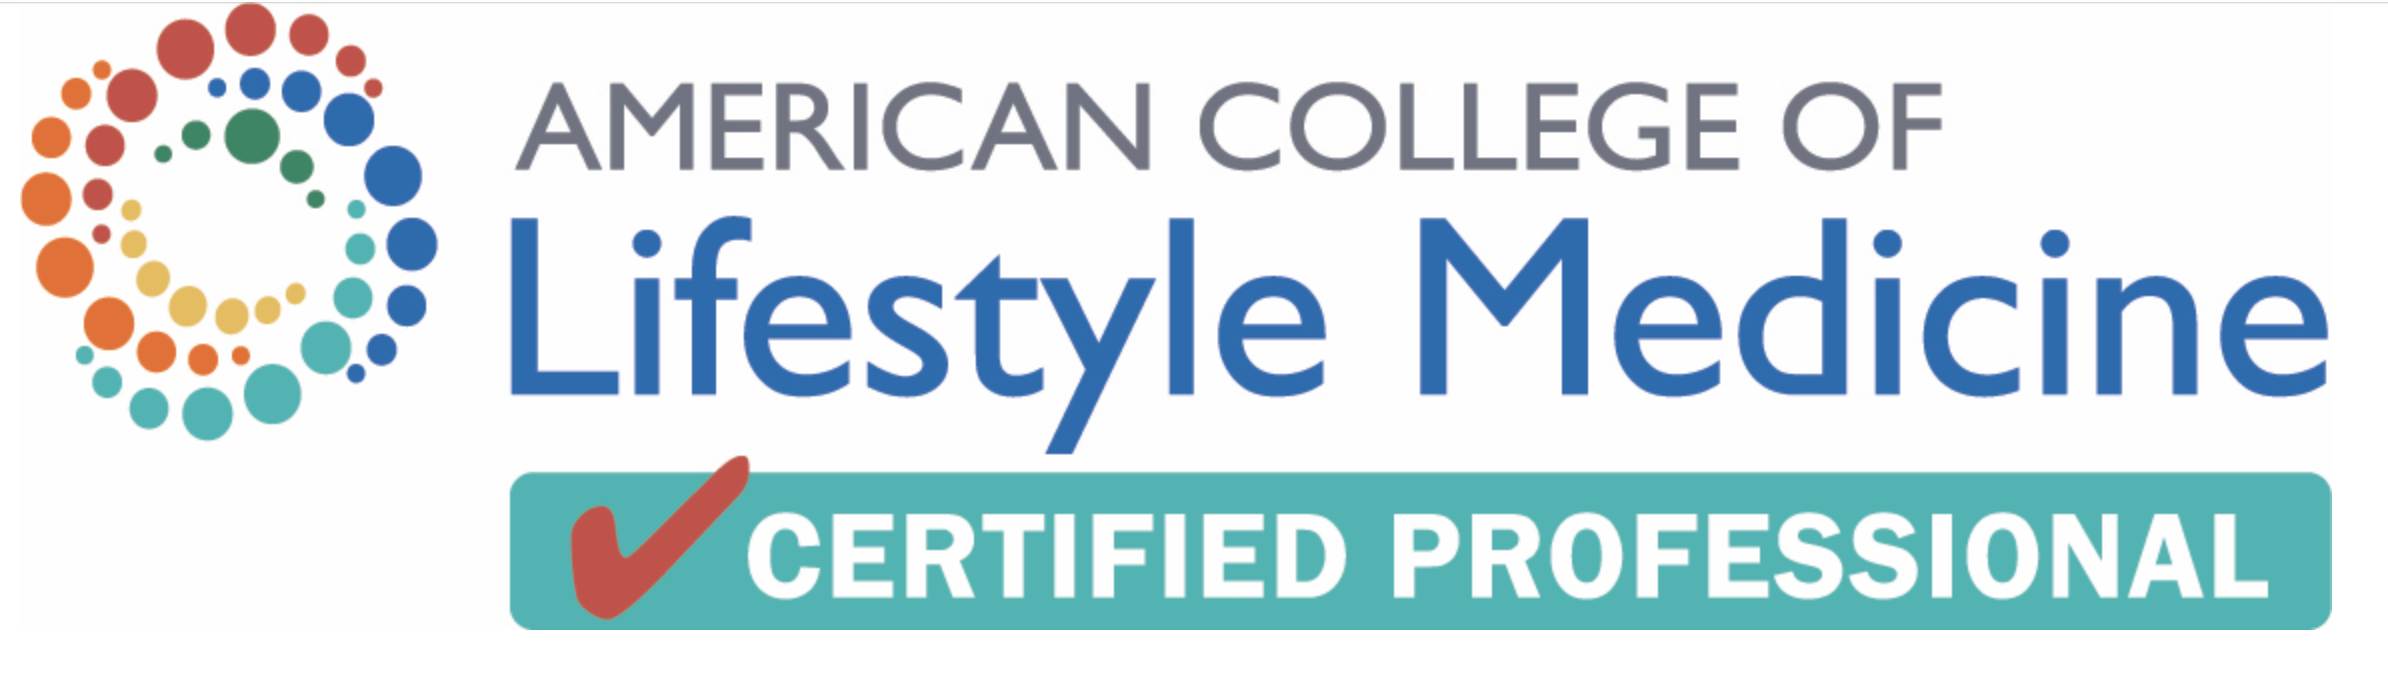 American College of Lifestyle Medicine - Professionnel certifié